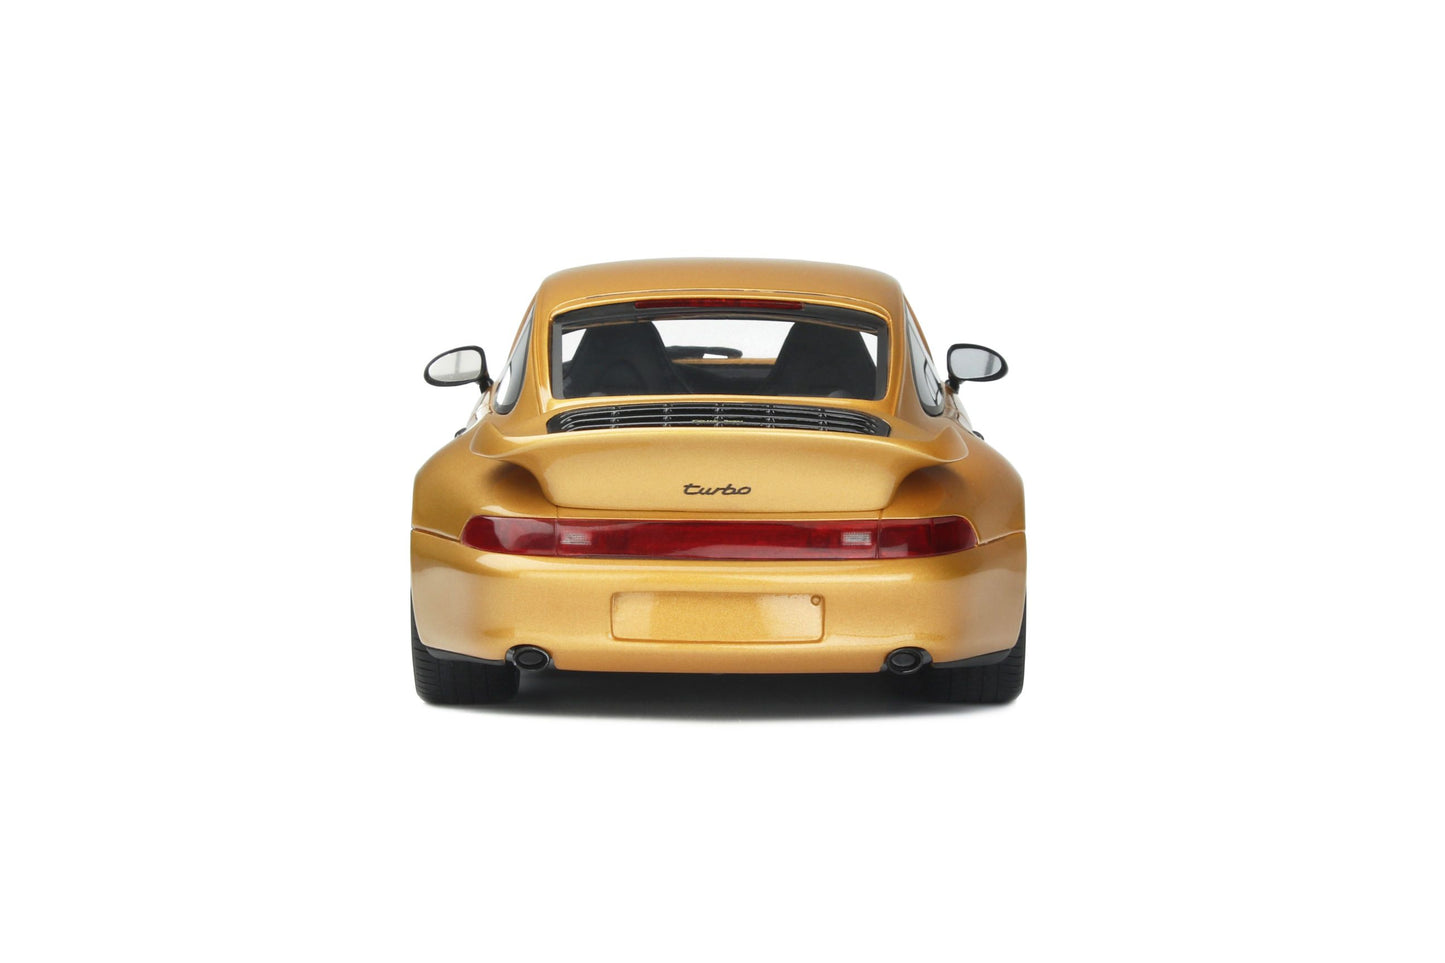 GT Spirit - Porsche 911 (993) Turbo S "Classic Project Gold" (Gold) 1:18 Scale Model Car